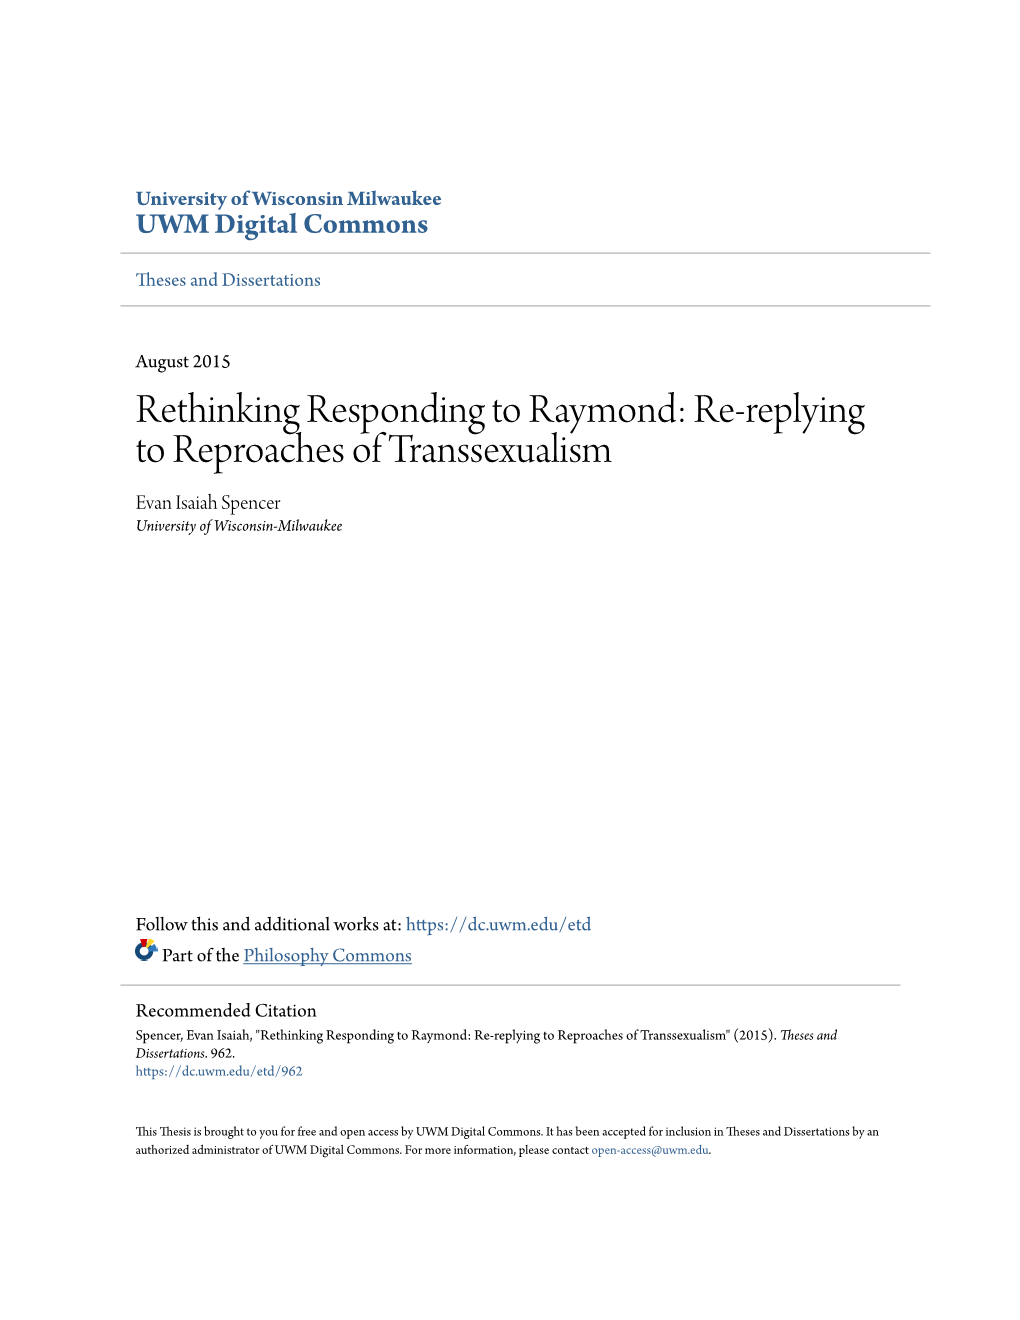 Rethinking Responding to Raymond: Re-Replying to Reproaches of Transsexualism Evan Isaiah Spencer University of Wisconsin-Milwaukee